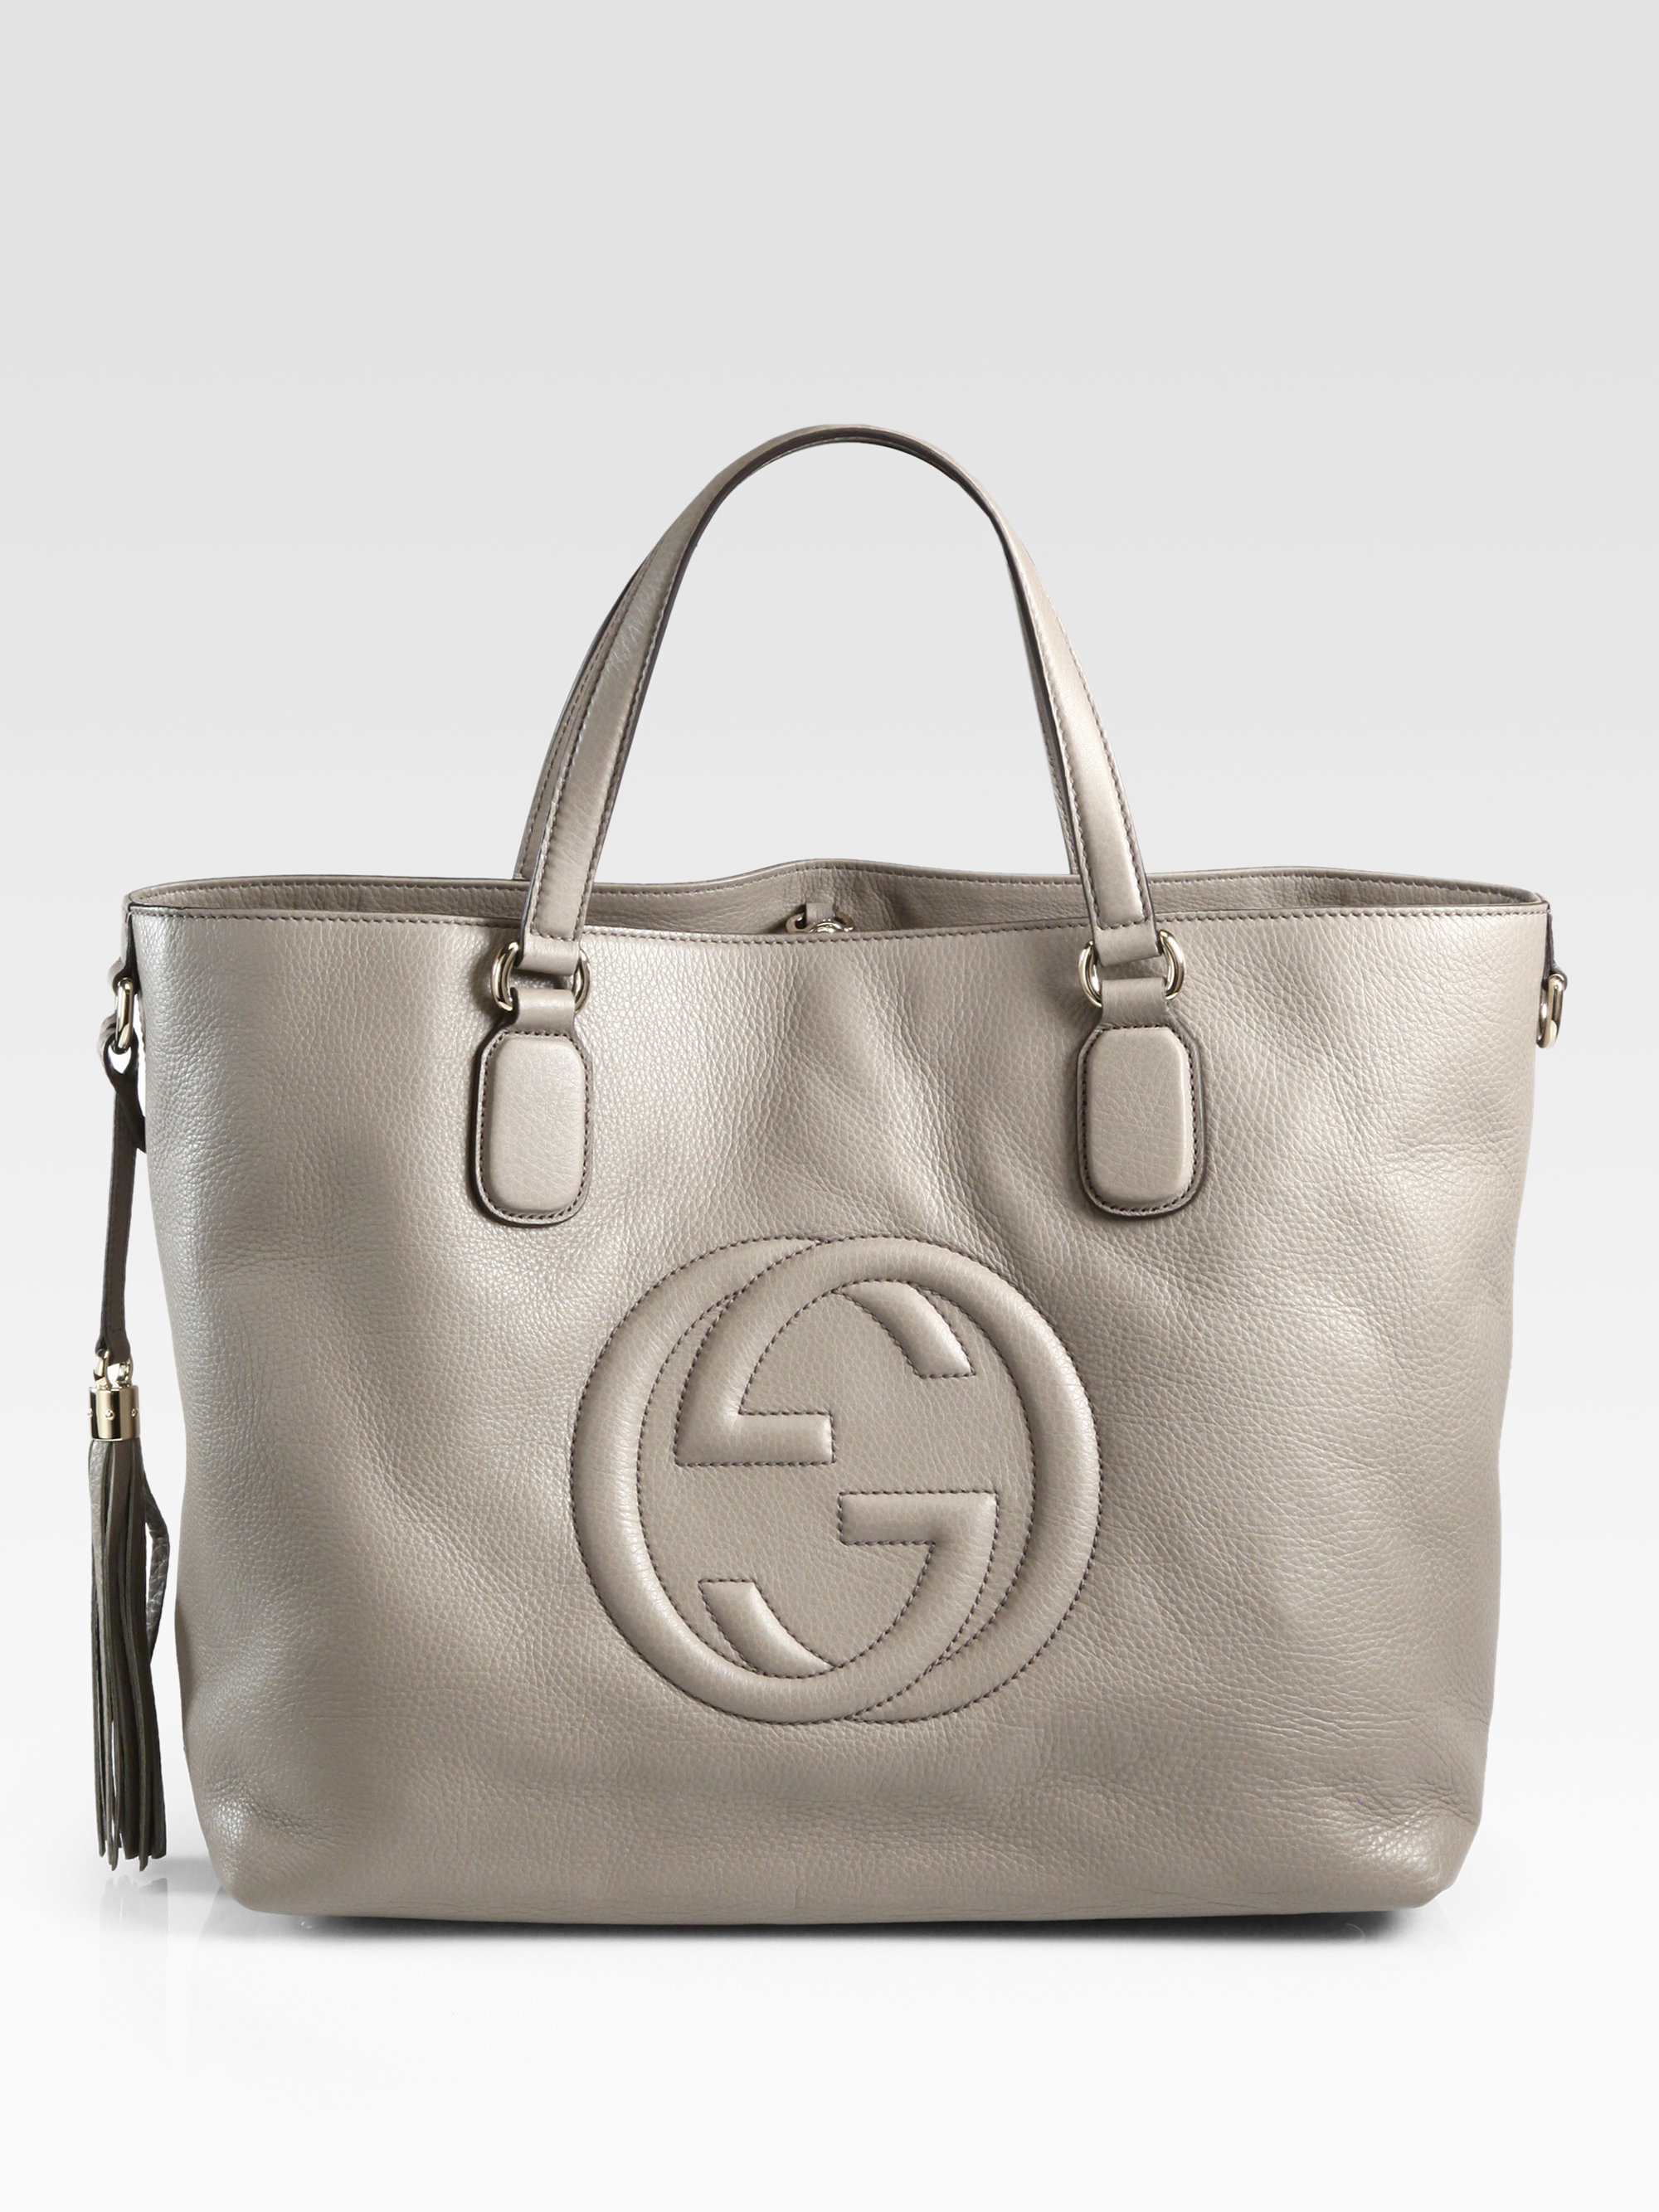 Lyst - Gucci Soho Medium Tote Bag in Gray